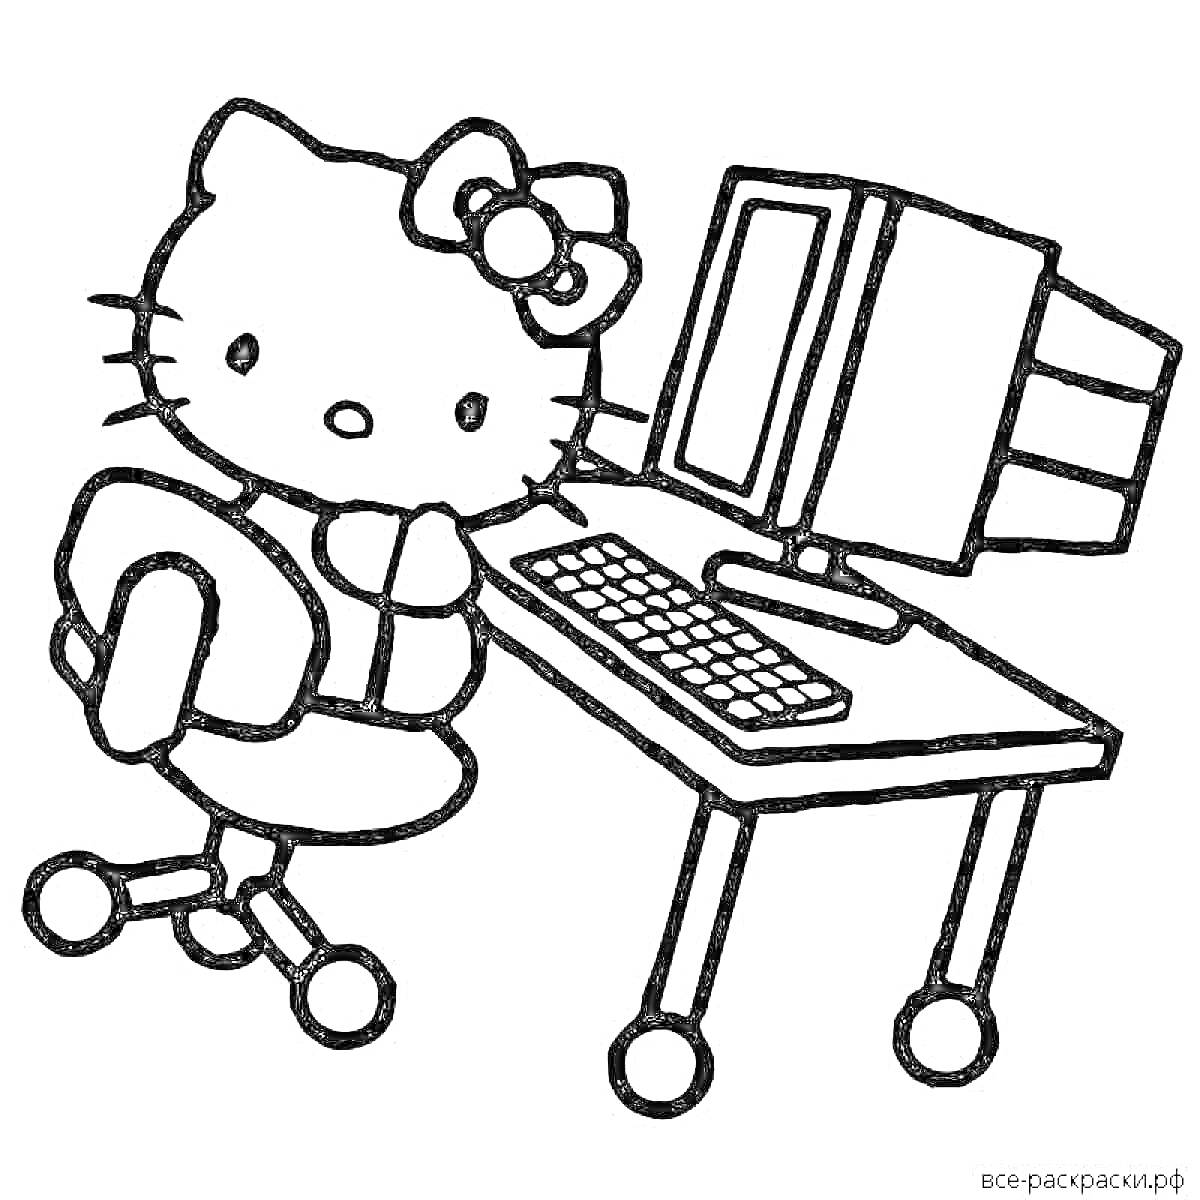 Раскраска Hello Kitty за компьютером — стул, стол, клавиатура, мышь, монитор